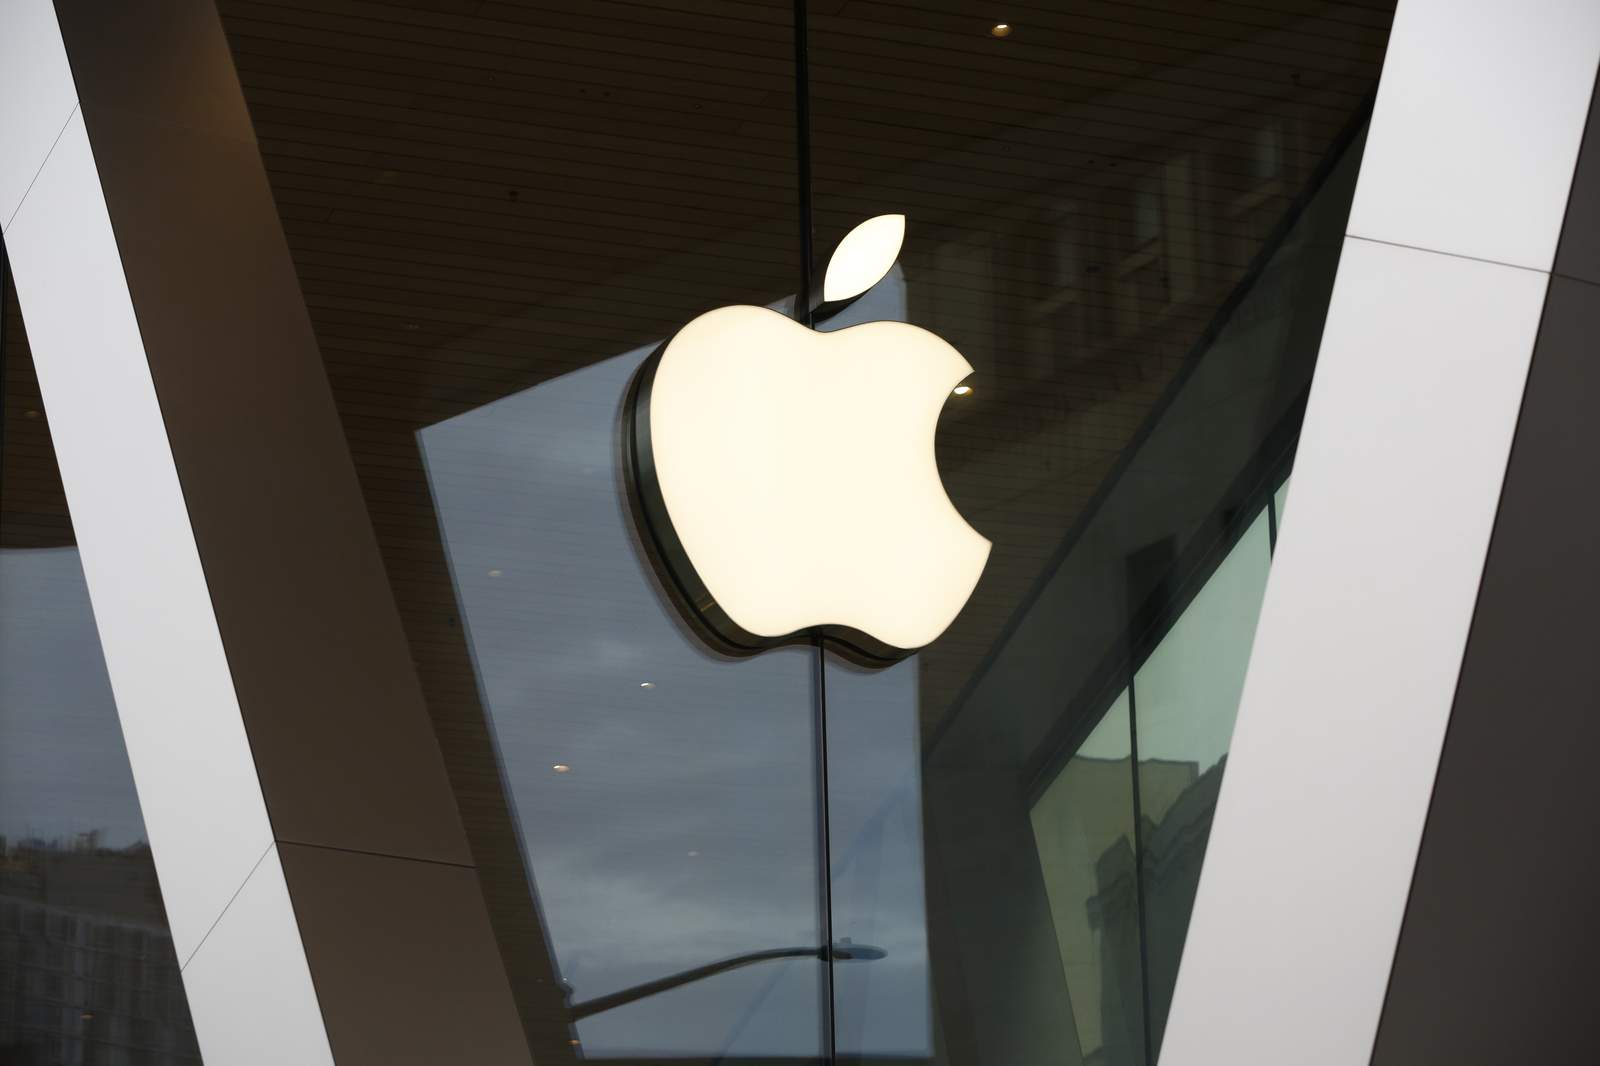 Apple shutters Michigan stores amid COVID surge